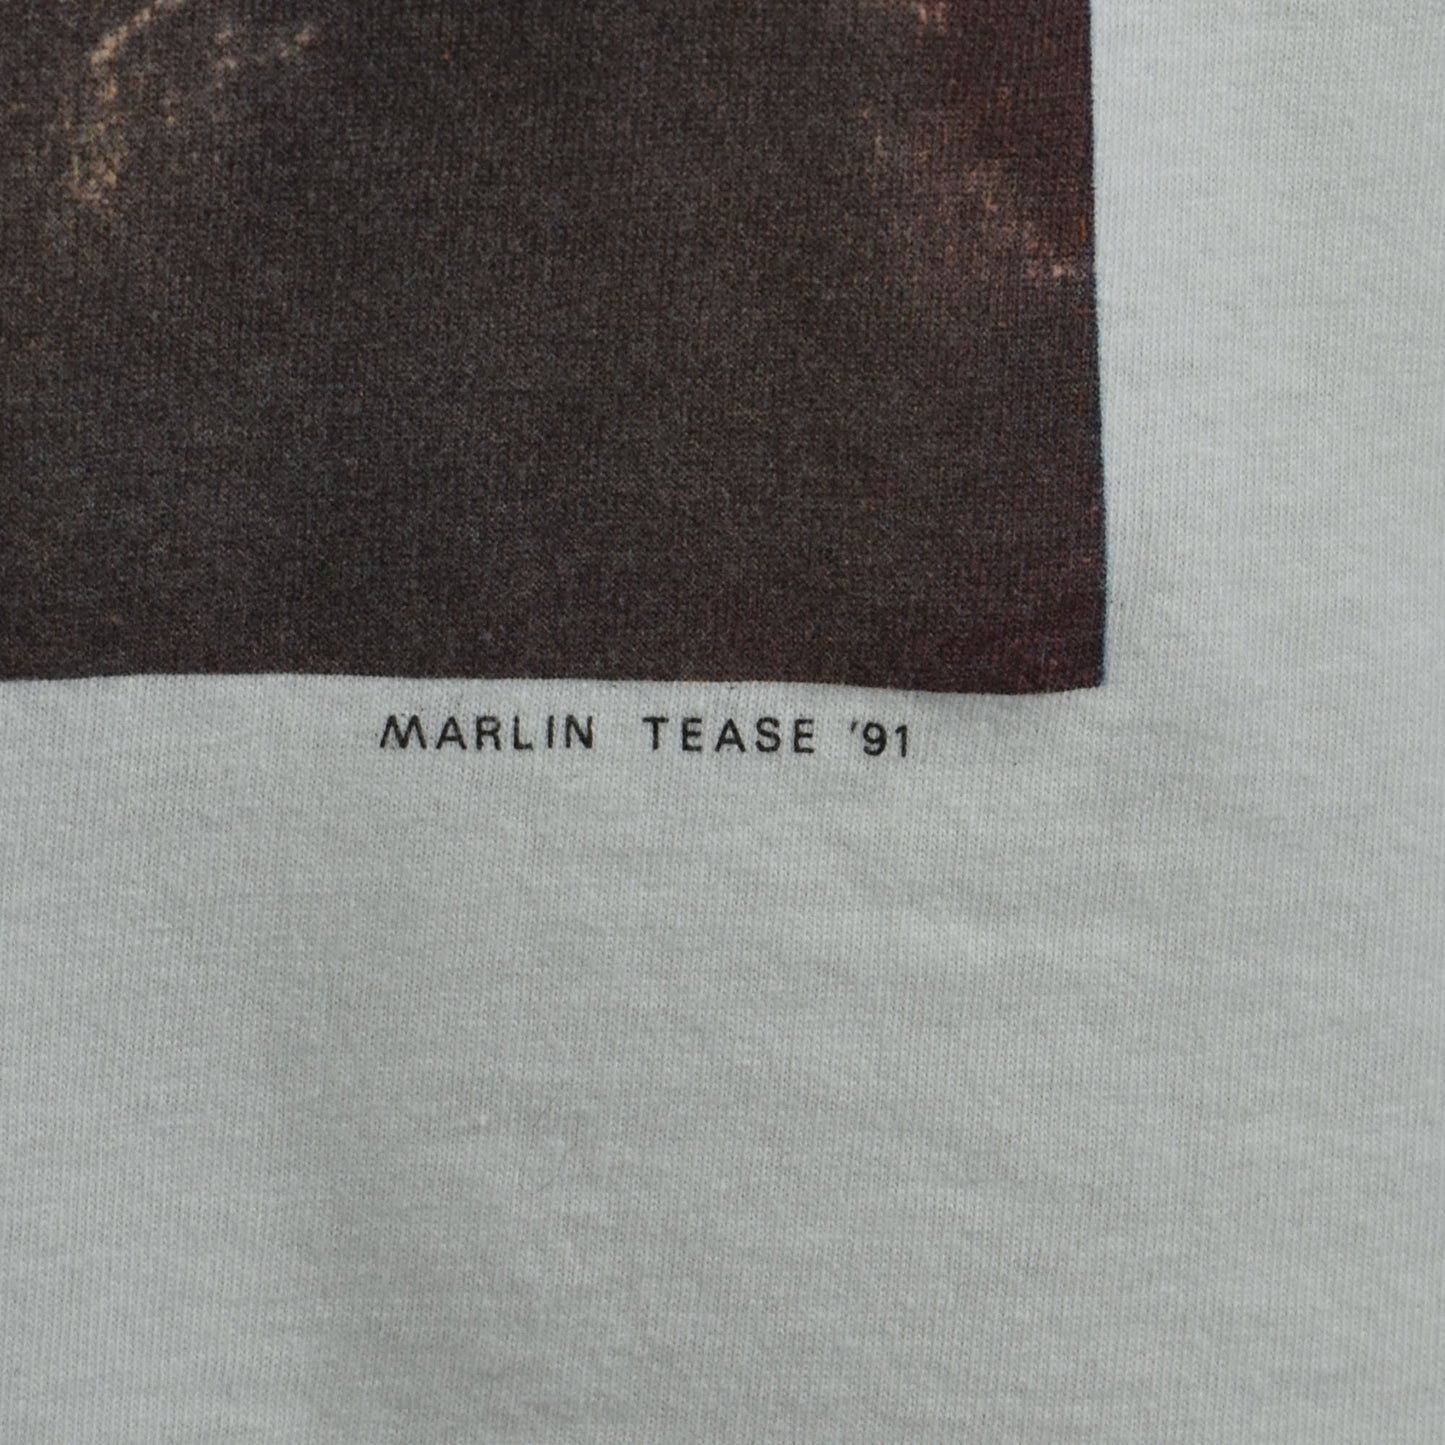 Vintage 1991 "Mona Lisa" Marlin Tease Printed Signal Mega-Tee Made in USA 100% Cotton- Size Large